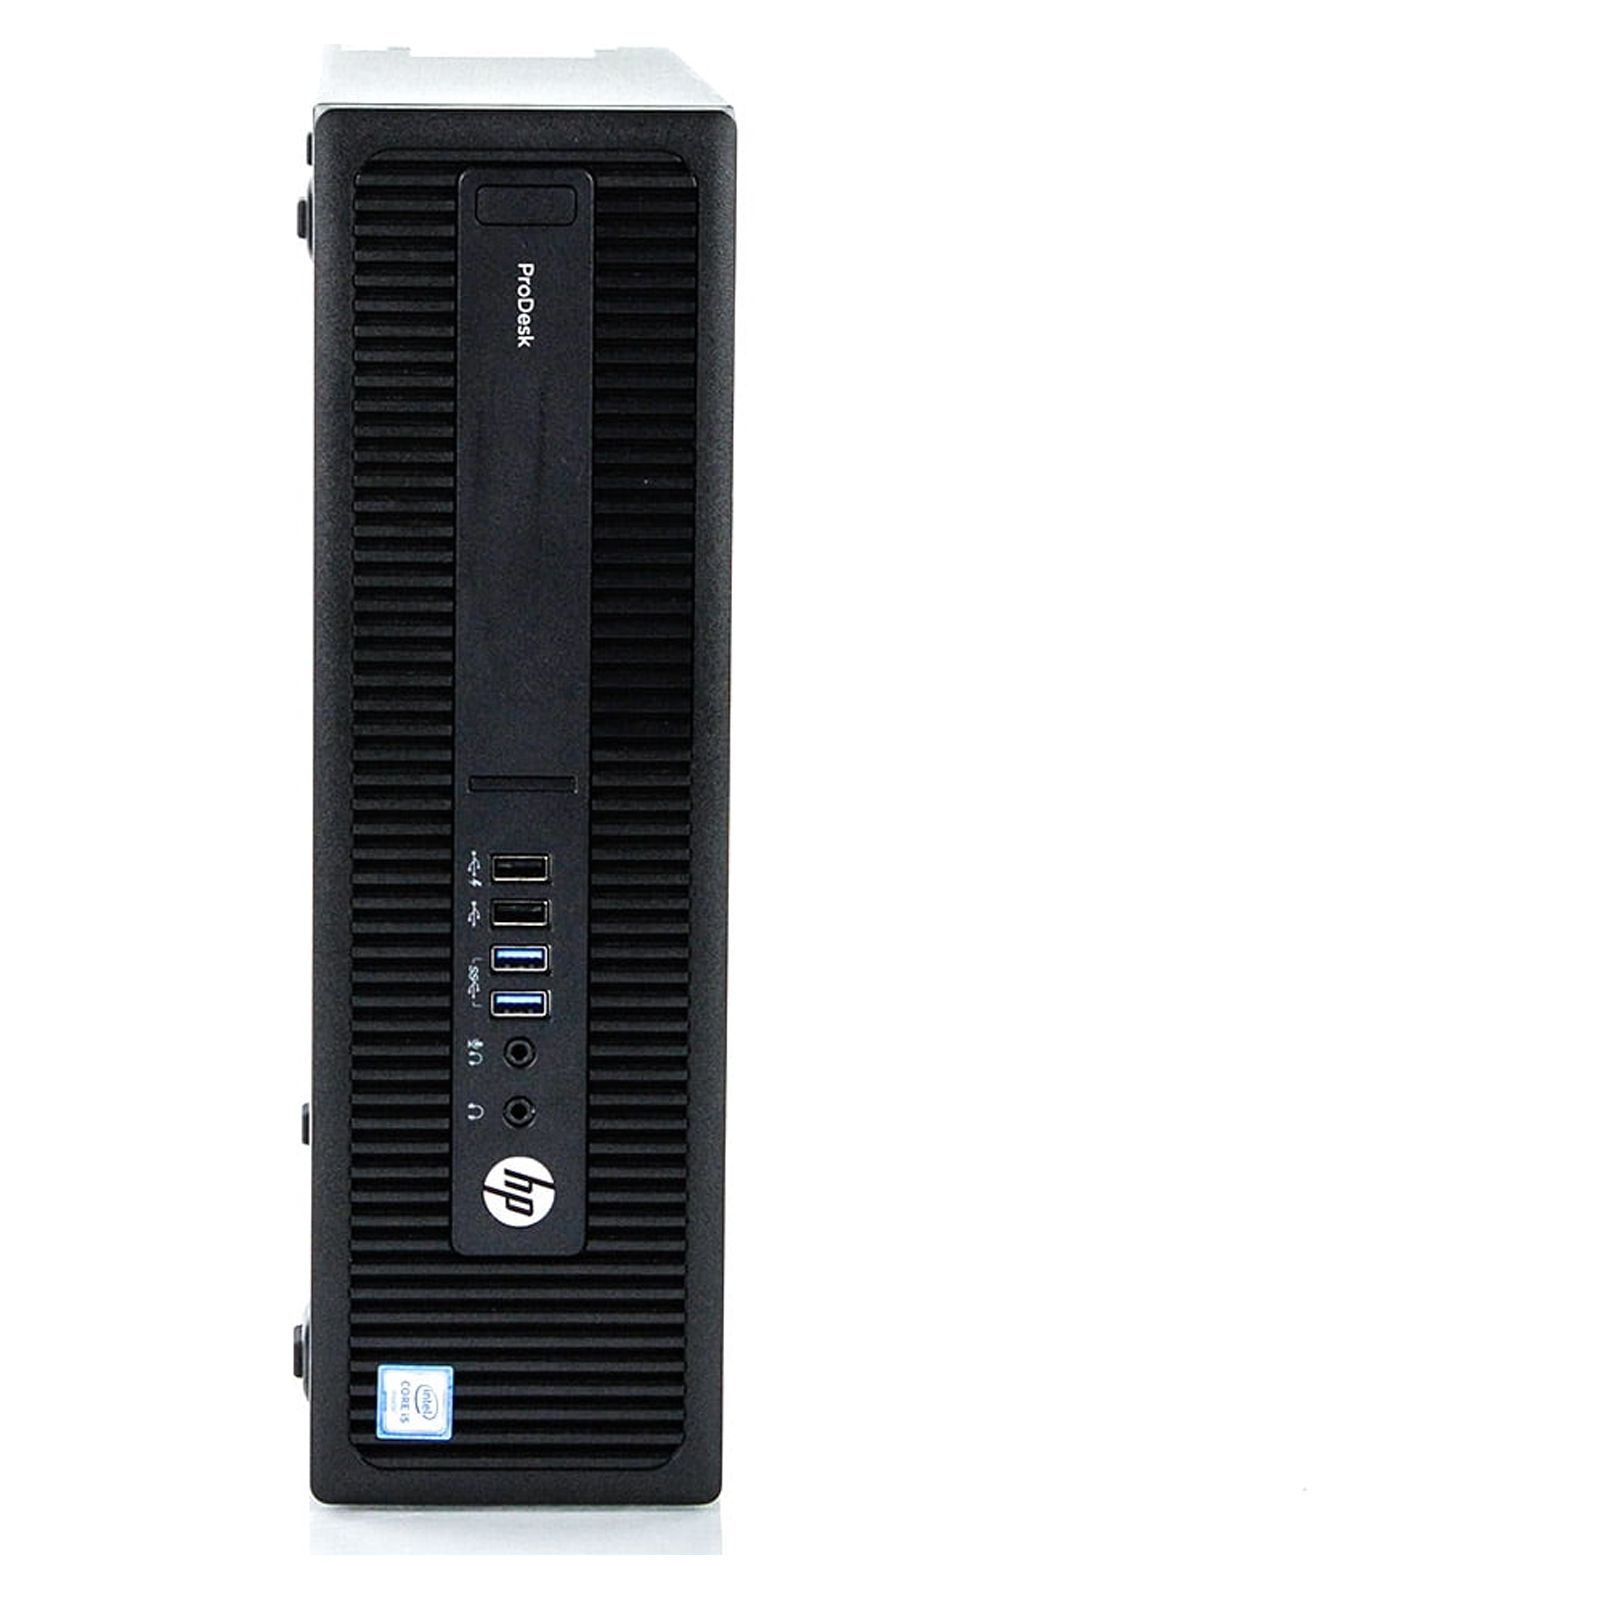 HP ProDesk 600 G2 SF Desktop Tower Computer, Intel Core i5, 8GB RAM, 256GB SSD, Windows 10 Pro, Black (Used) - image 2 of 6